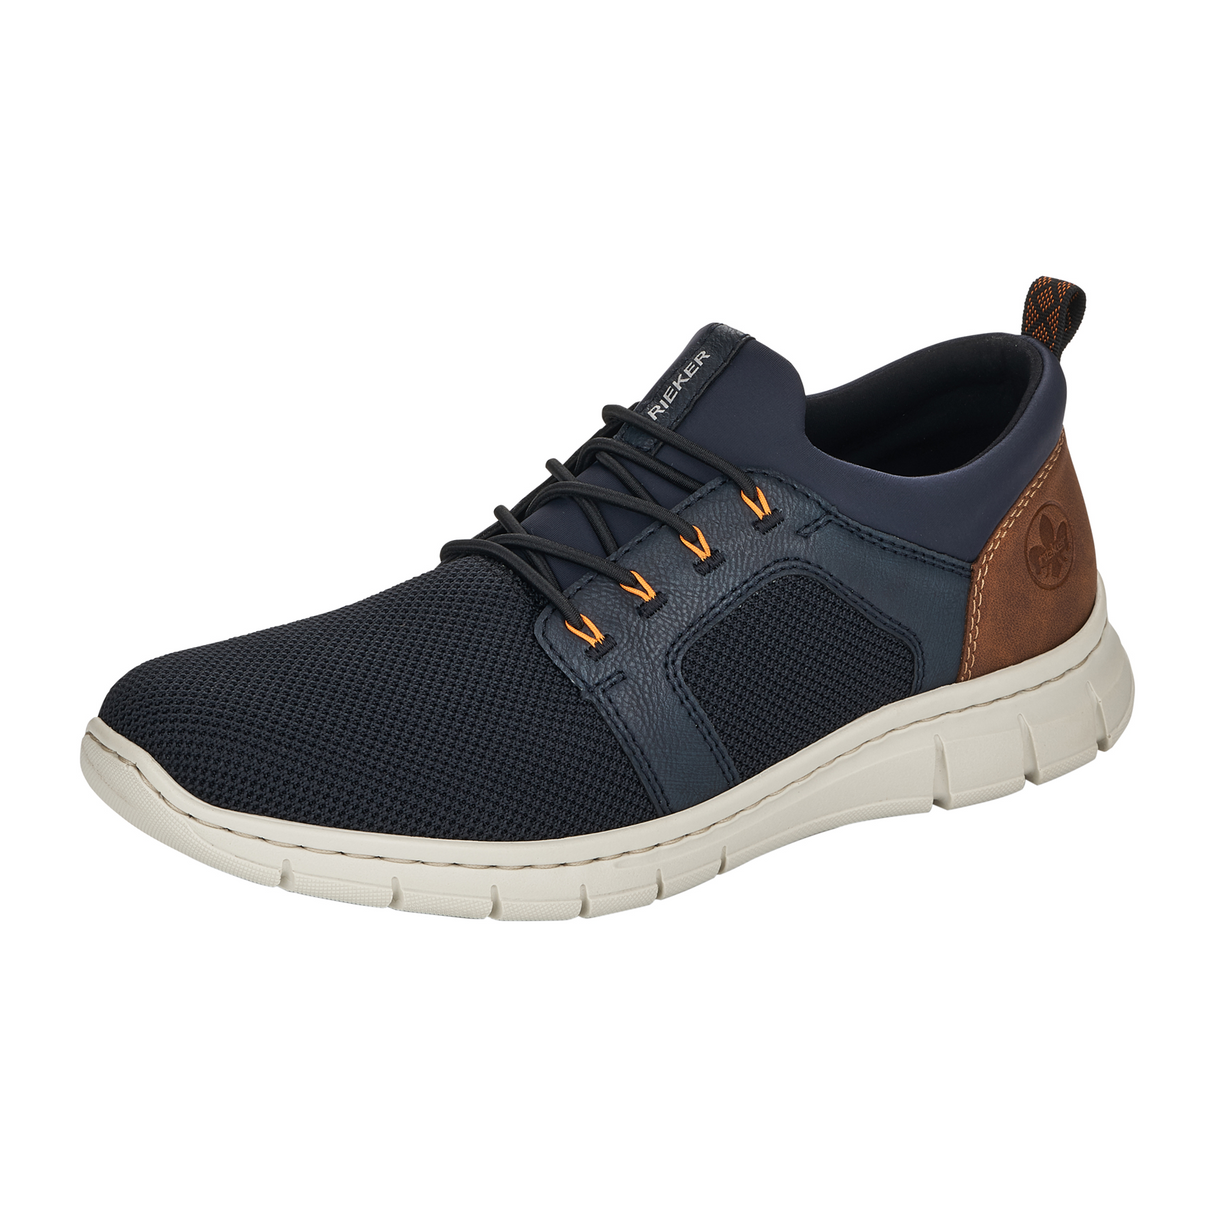 Rieker B7796-14 Timo Sneaker (Men) - Pazifik/Lake/Mandel/Navy Athletic - Casual - Slip On - The Heel Shoe Fitters